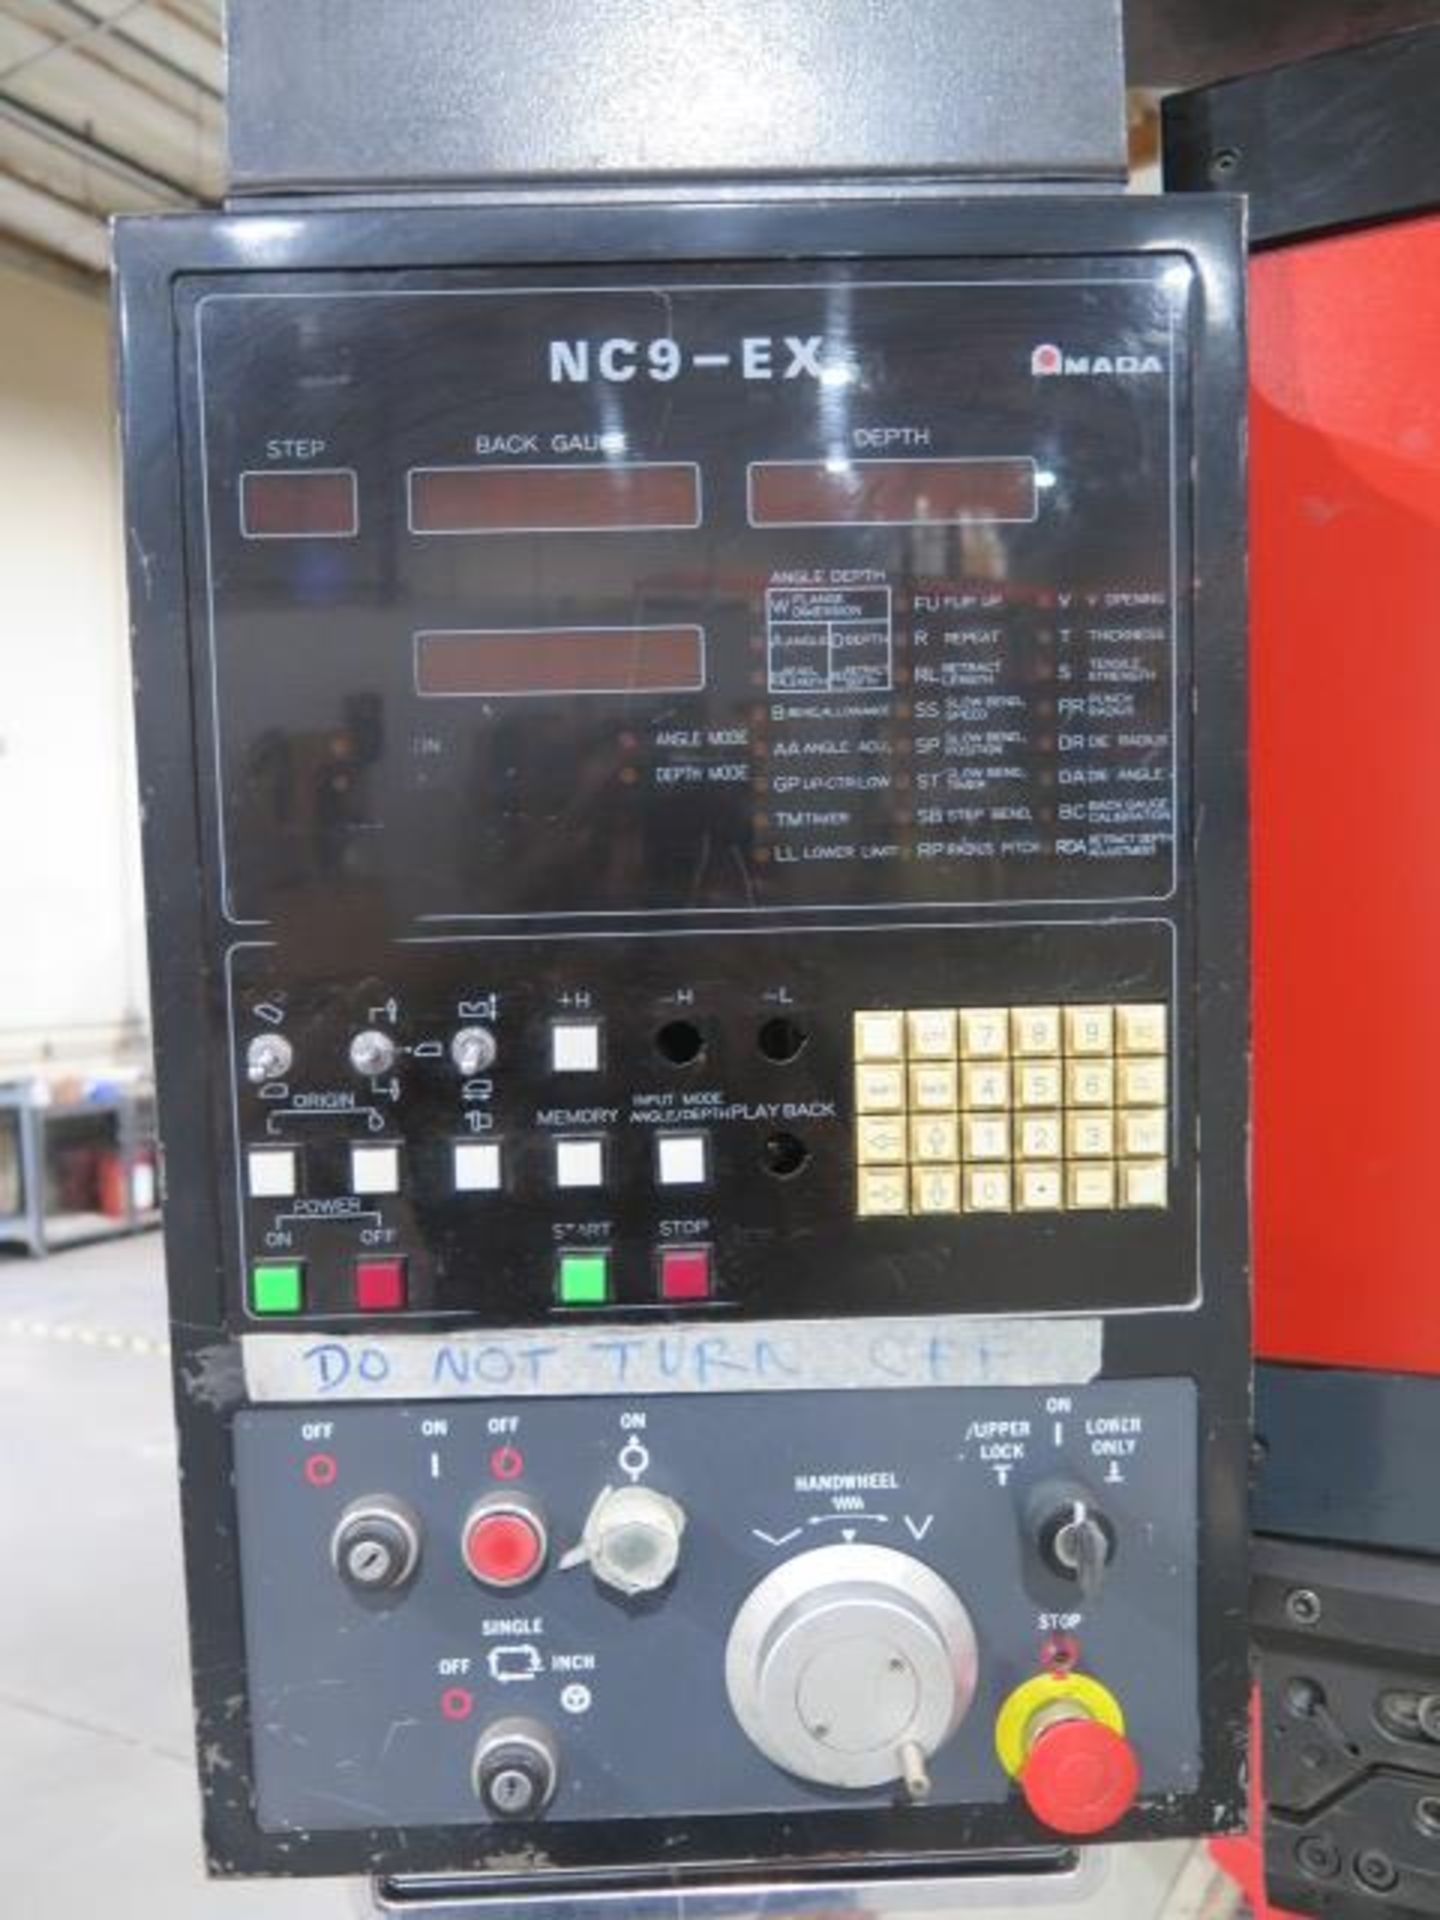 Amada RG-50D mdl. FBD-5020E 50 Ton x 78” CNC Press Brake s/n 5200132 w/ Amada NC9-EX Controls, 78.7” - Image 9 of 12